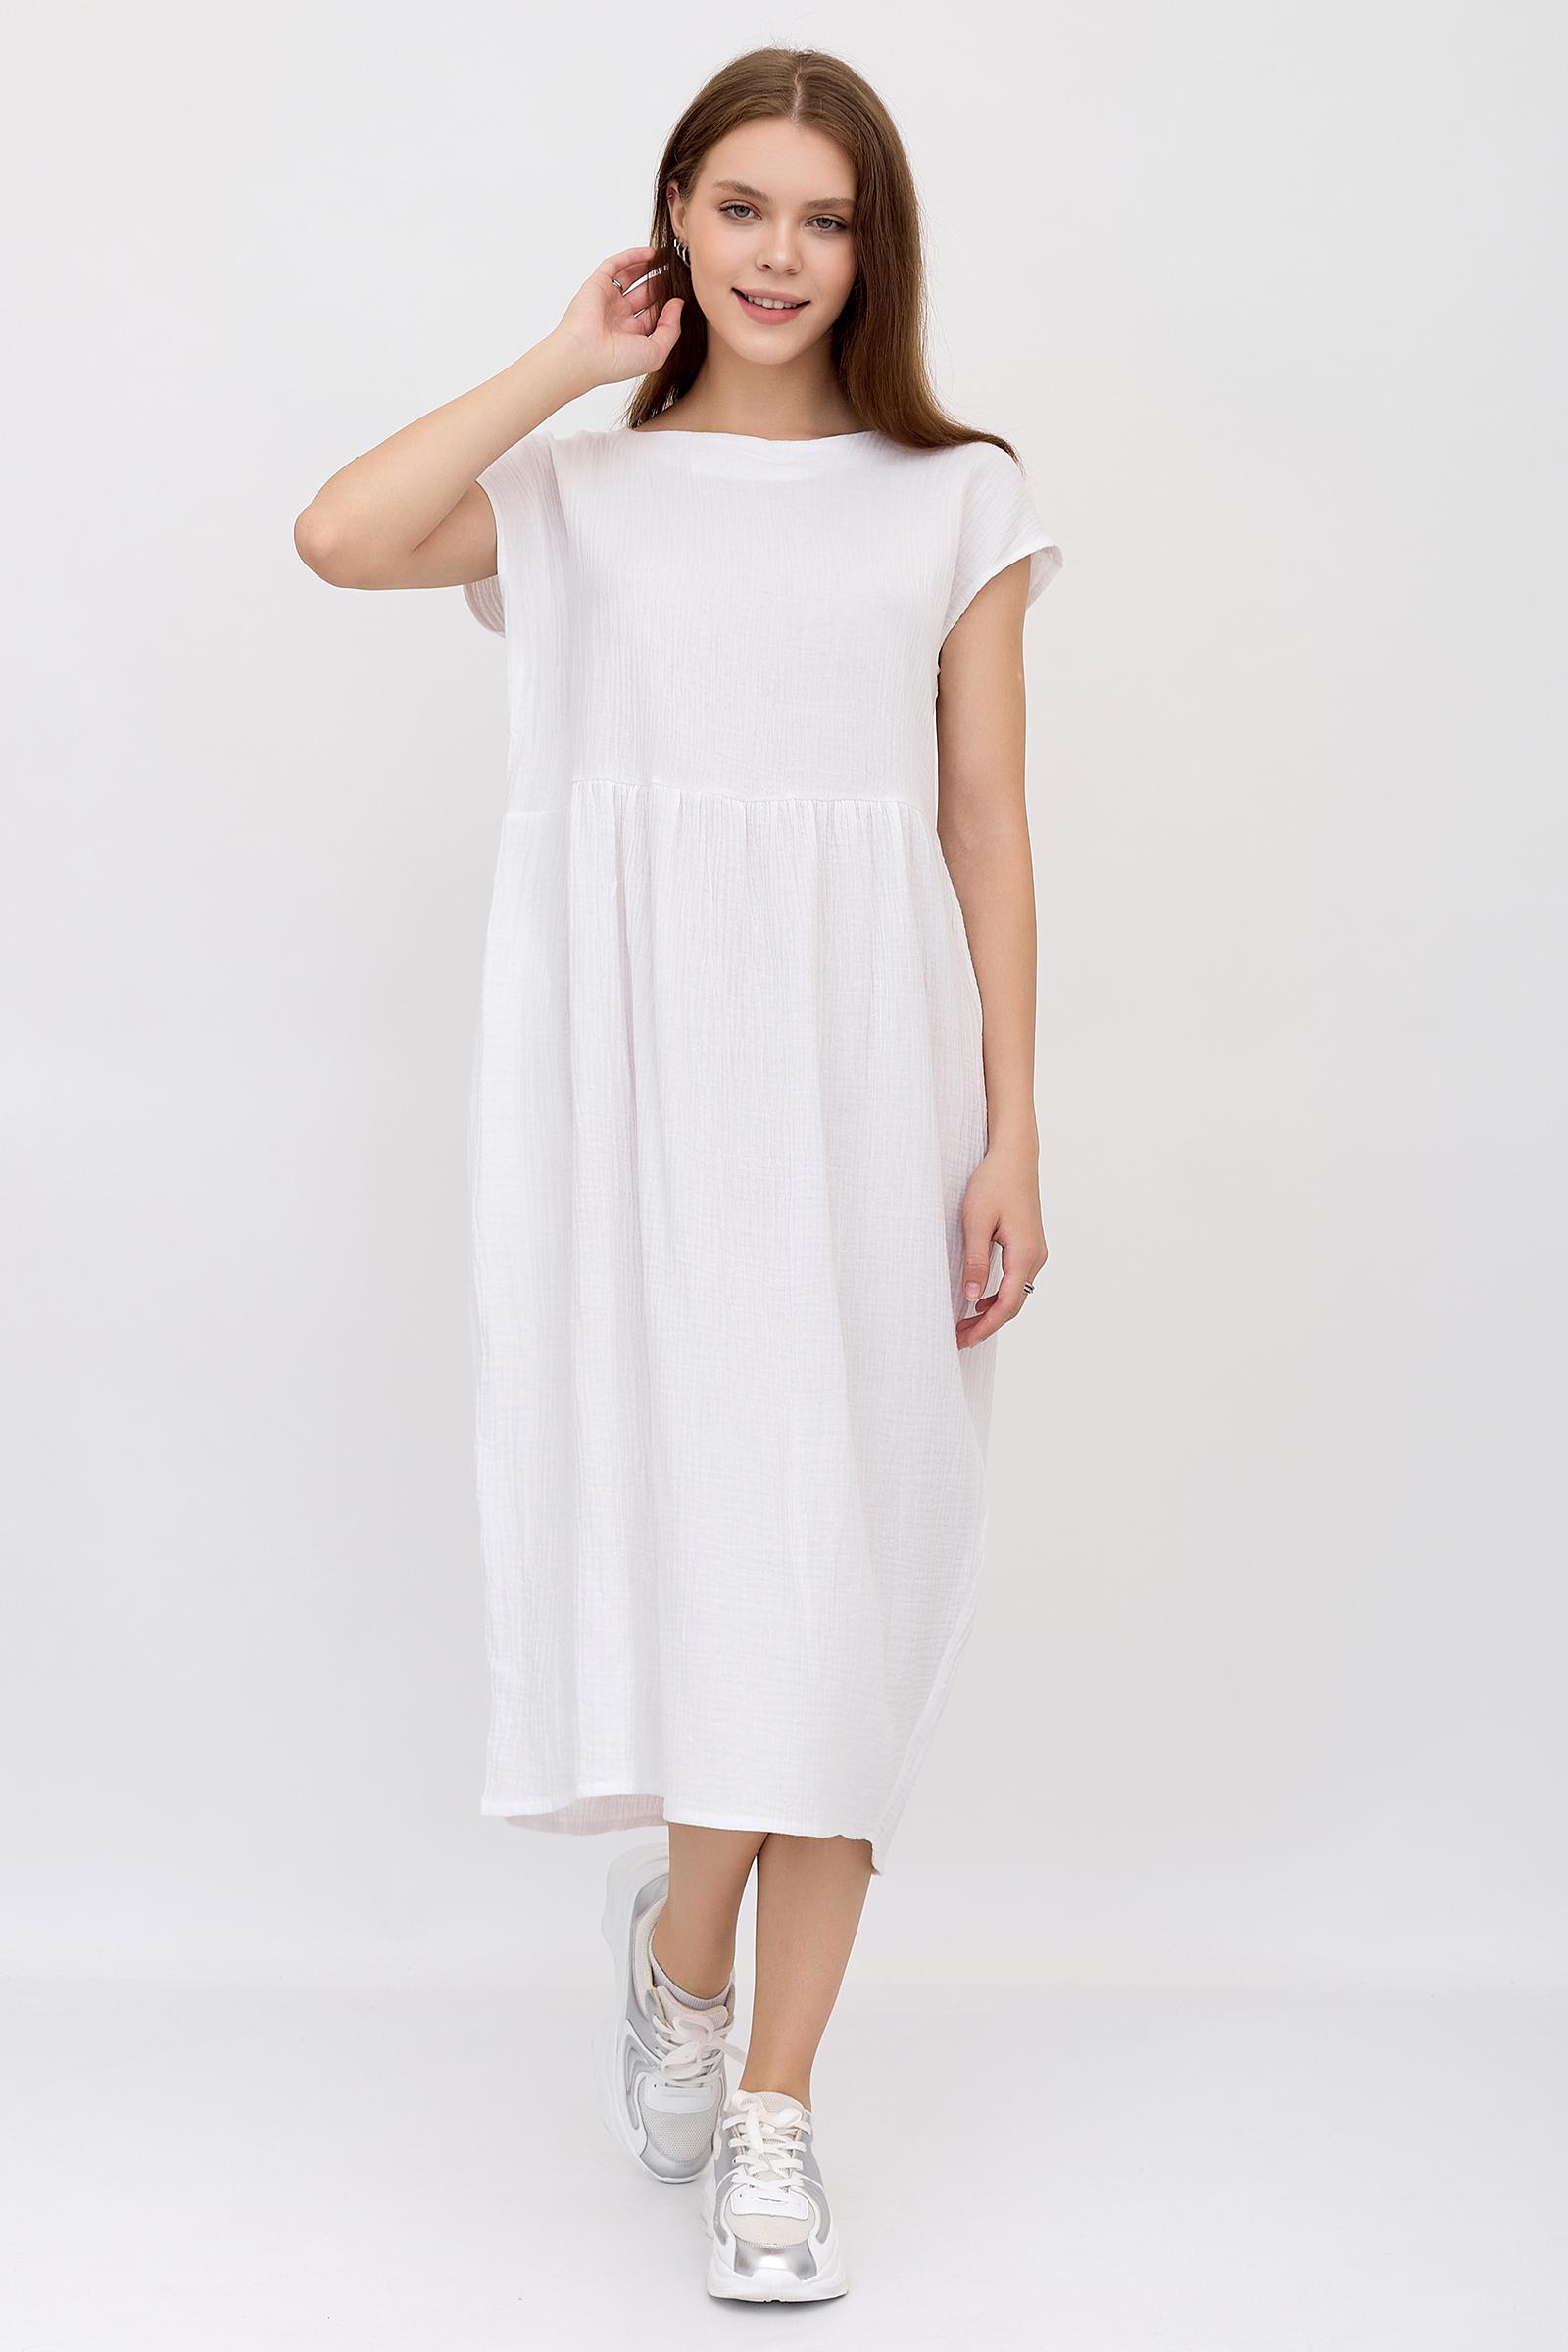 Платье женское LikaDress 18-1789 белое 44 RU